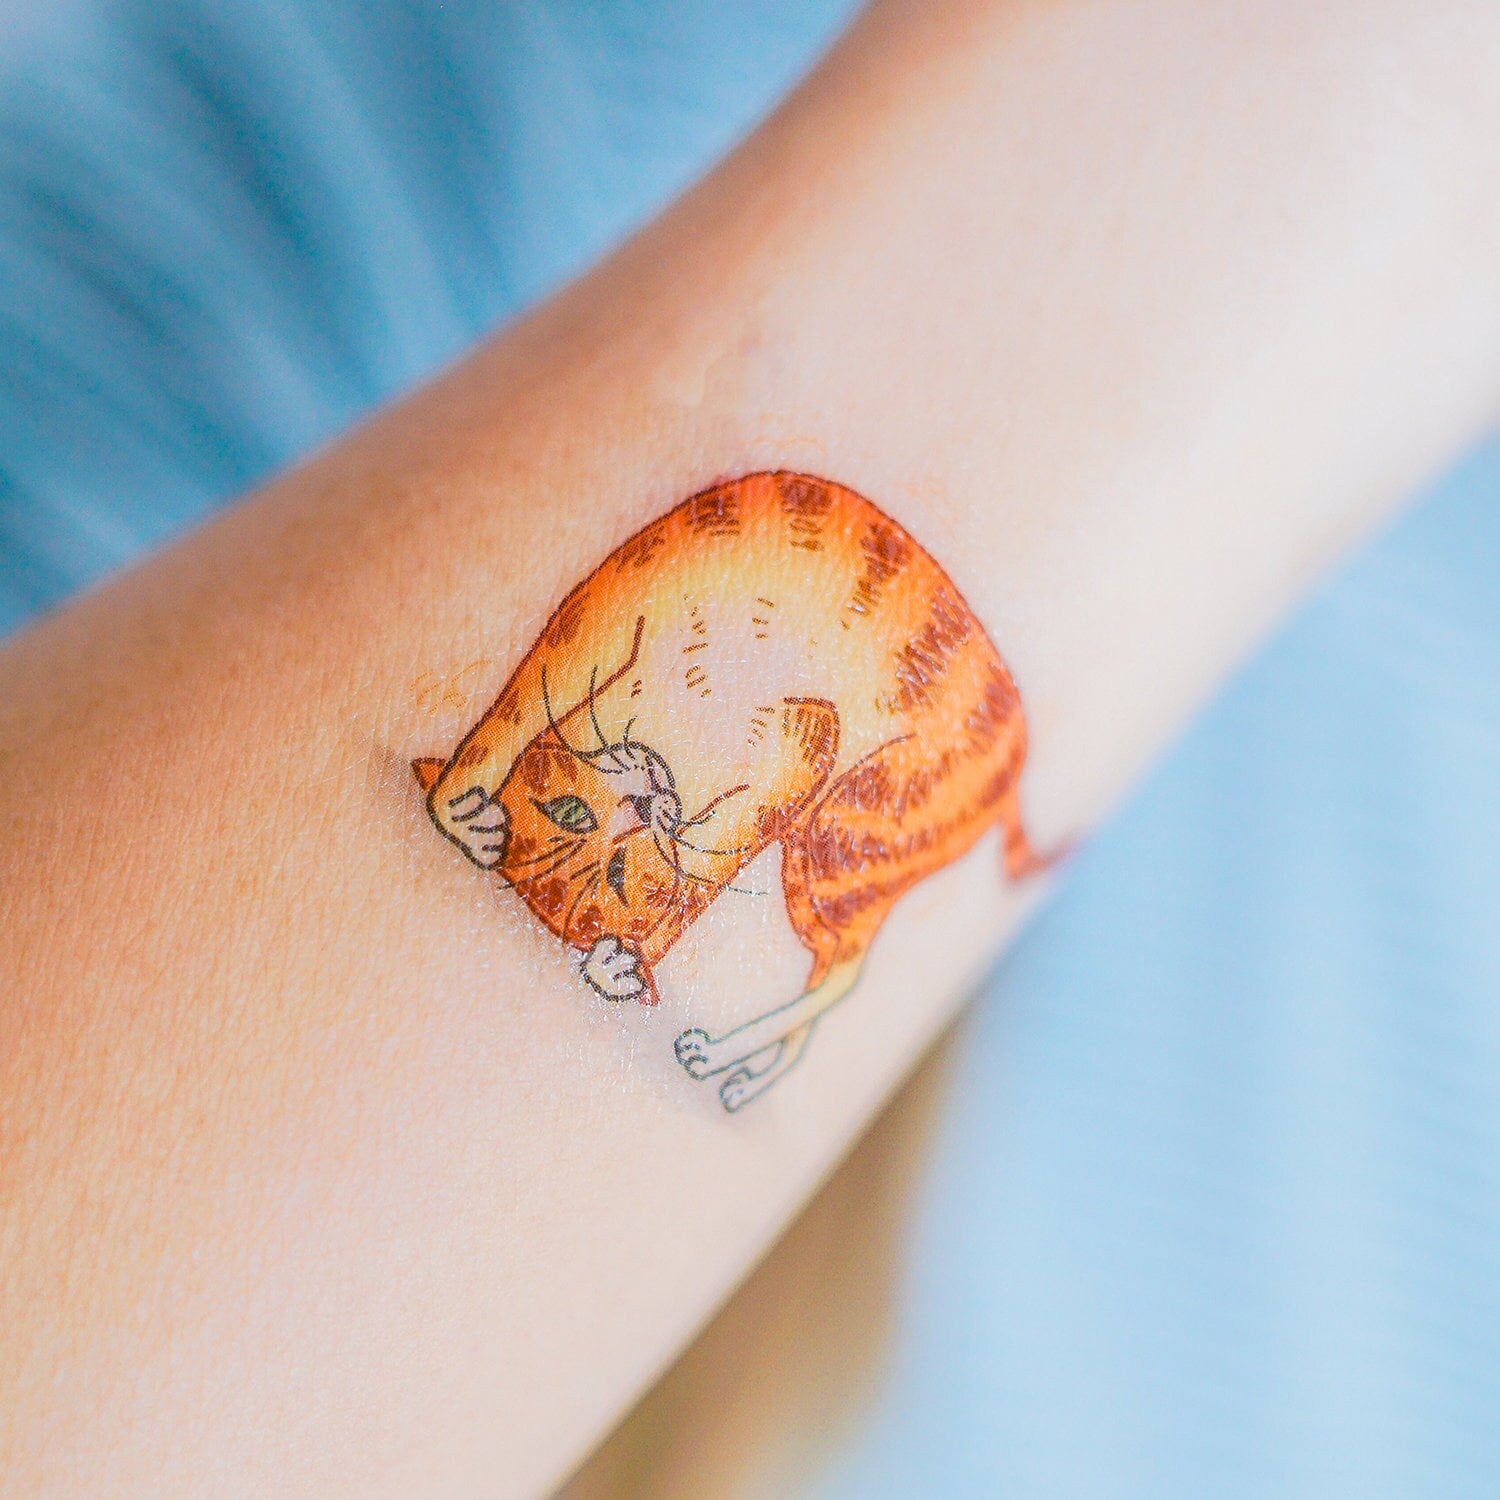 47 Cute Cat Tattoos For Women  Pulptastic